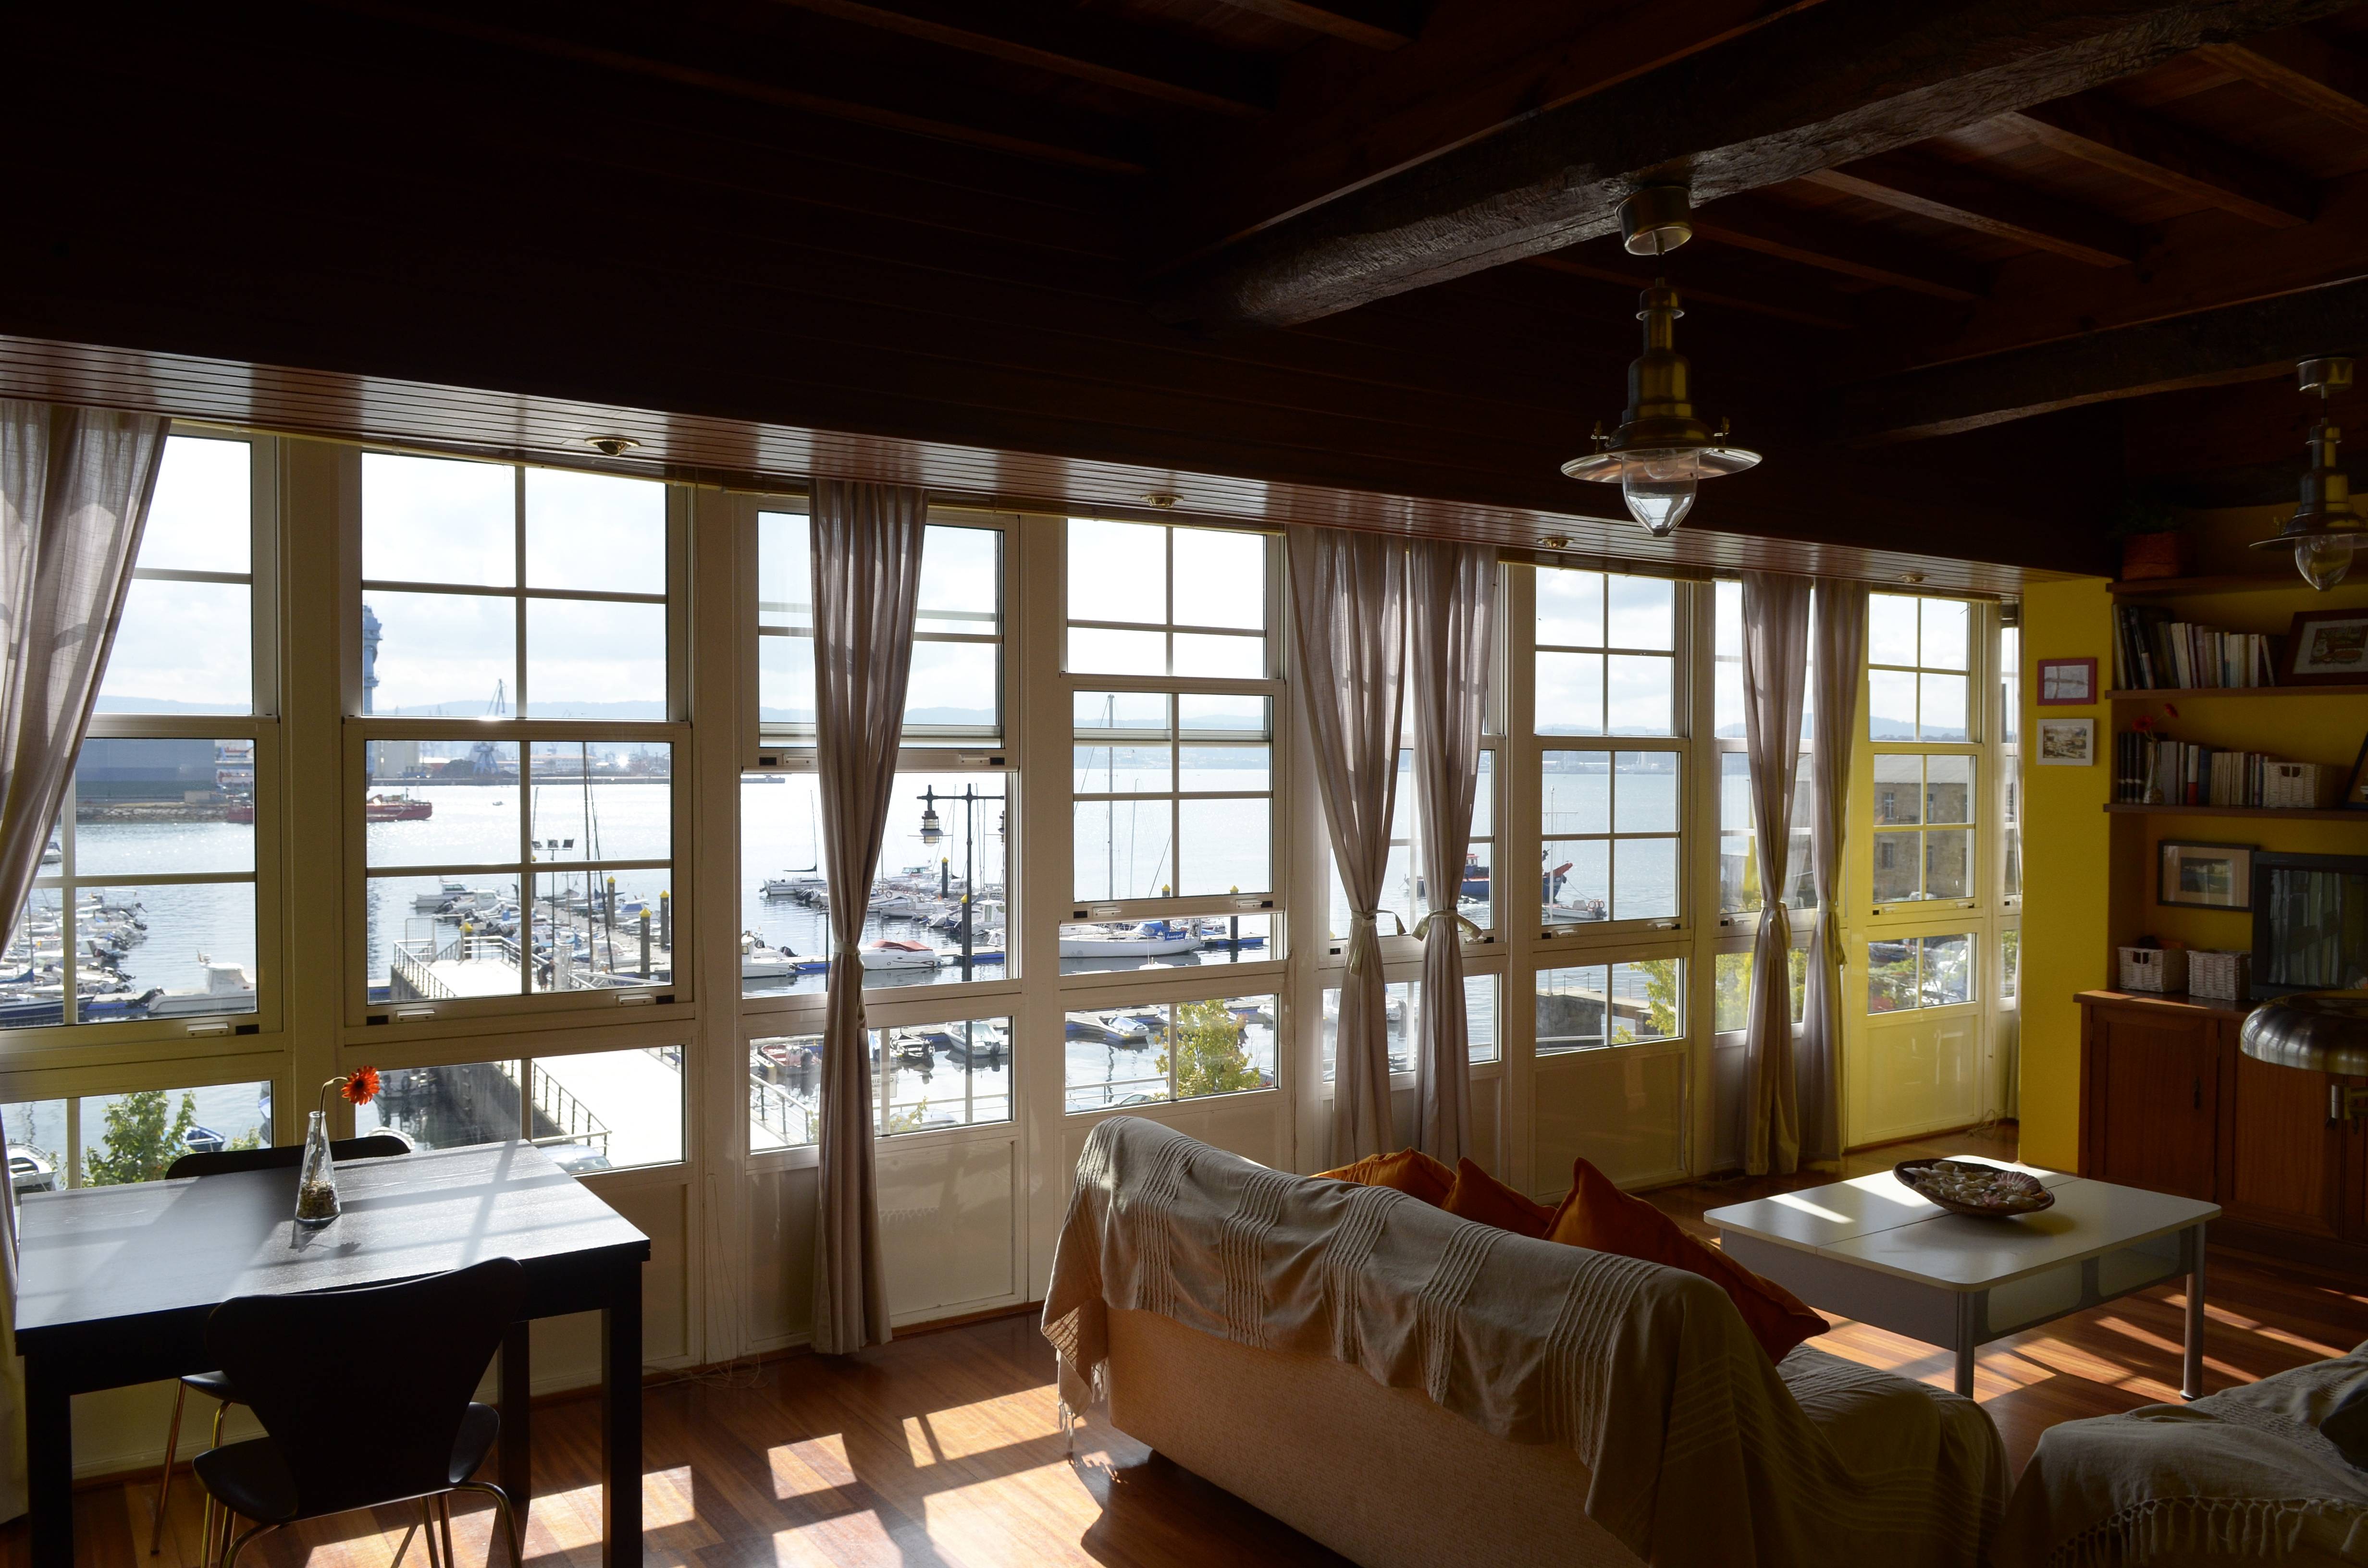 Casa en alquiler en 1a línea de playa - A Graña, Ferrol (A ...